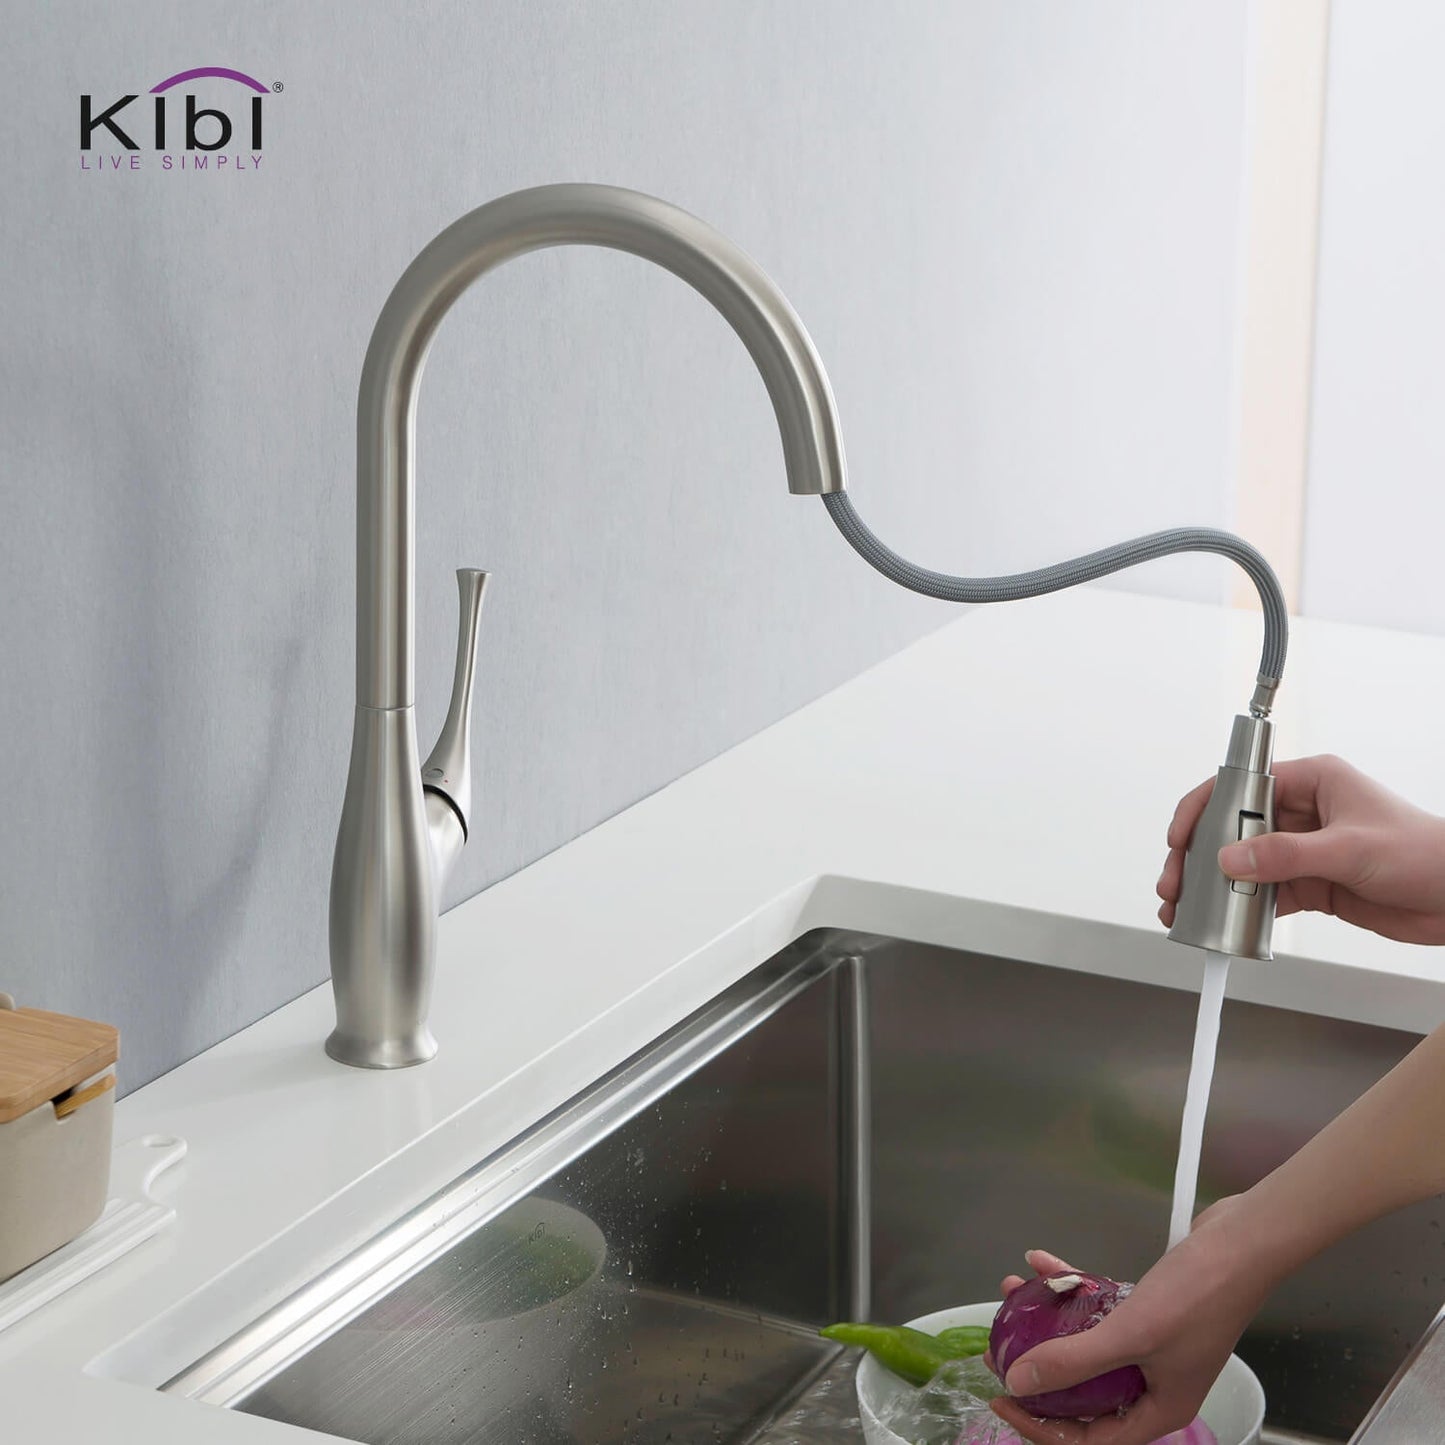 Kibi Cedar Single Handle High Arc Pull Down Kitchen Faucet in Brushed Nickel Finish